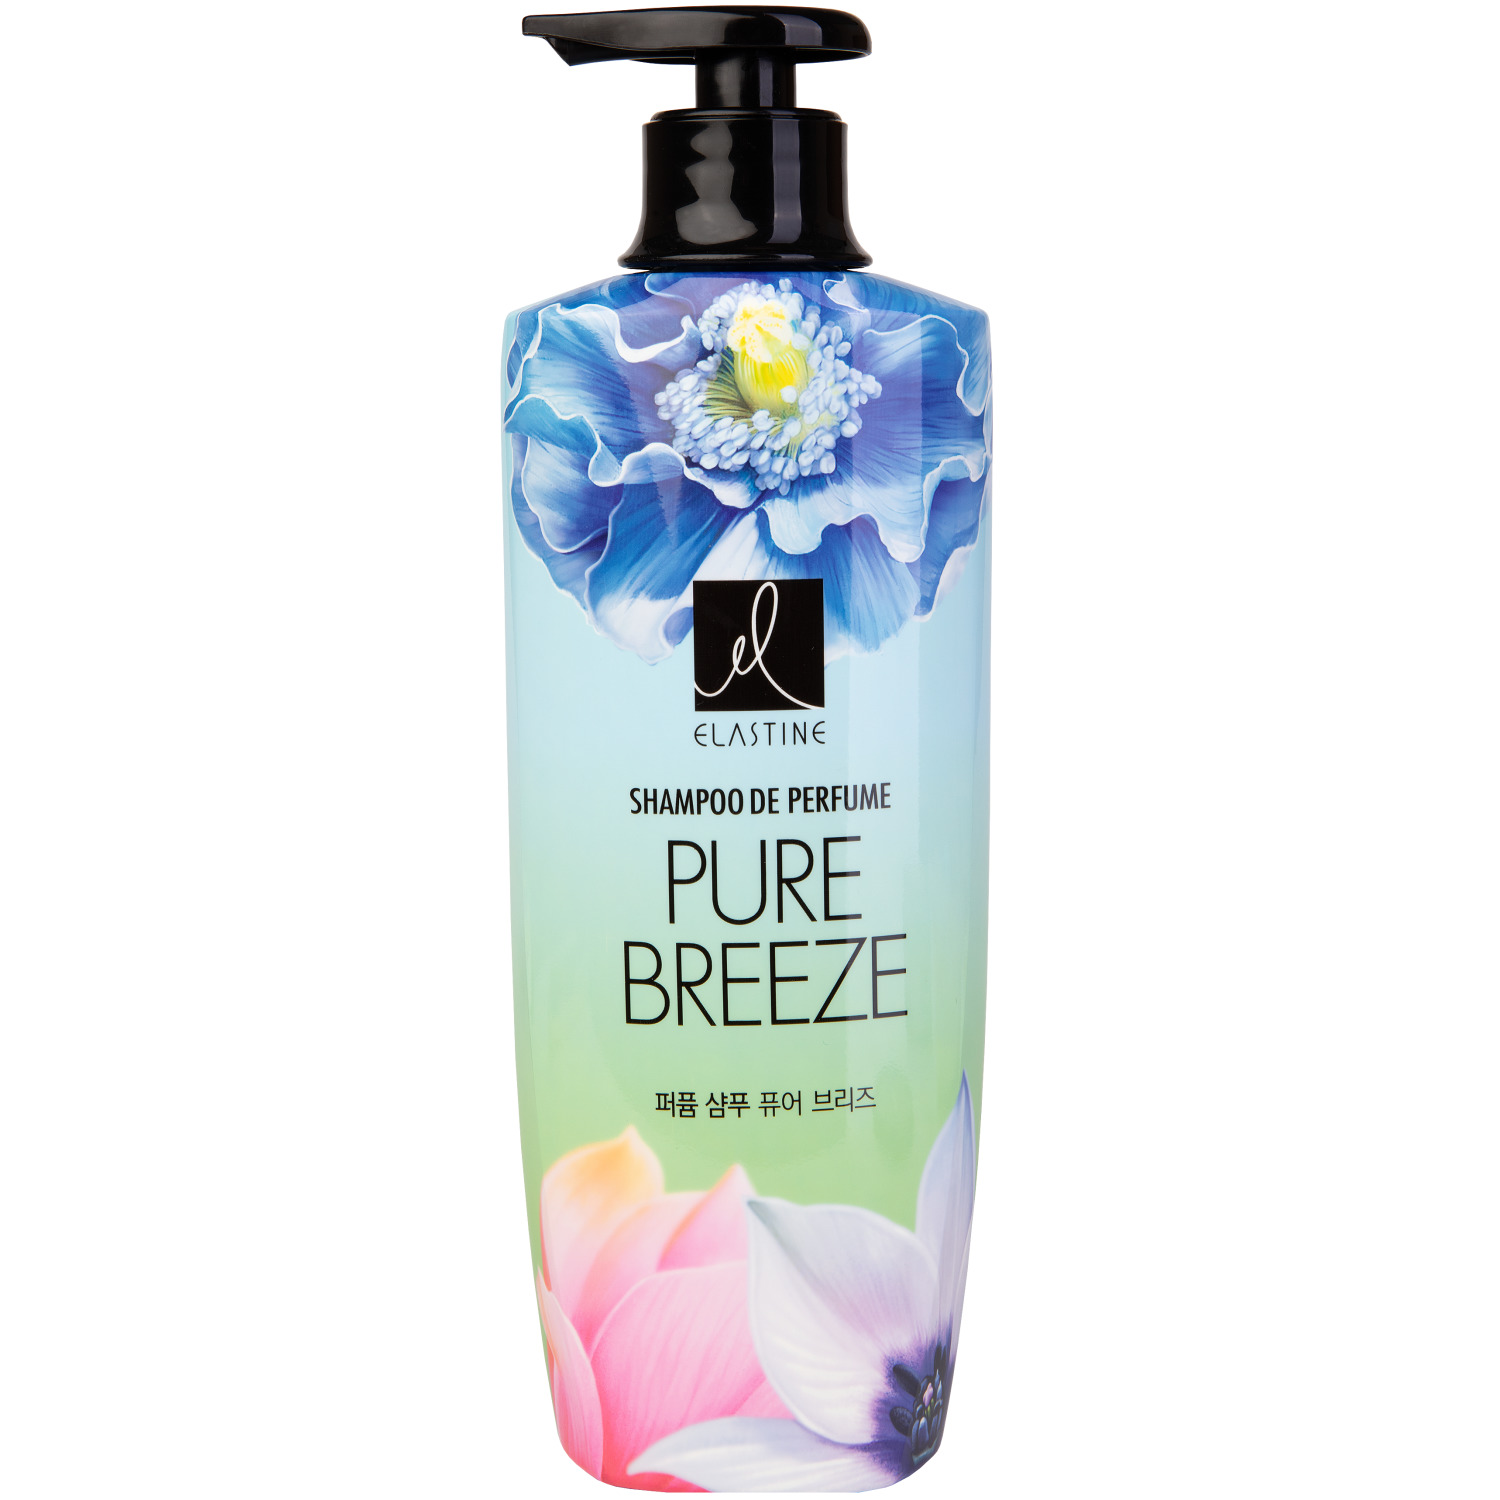 Шампунь Elastine Perfume Pure breeze парфюмированный 600 мл хозяйственное мыло pure water 175 г